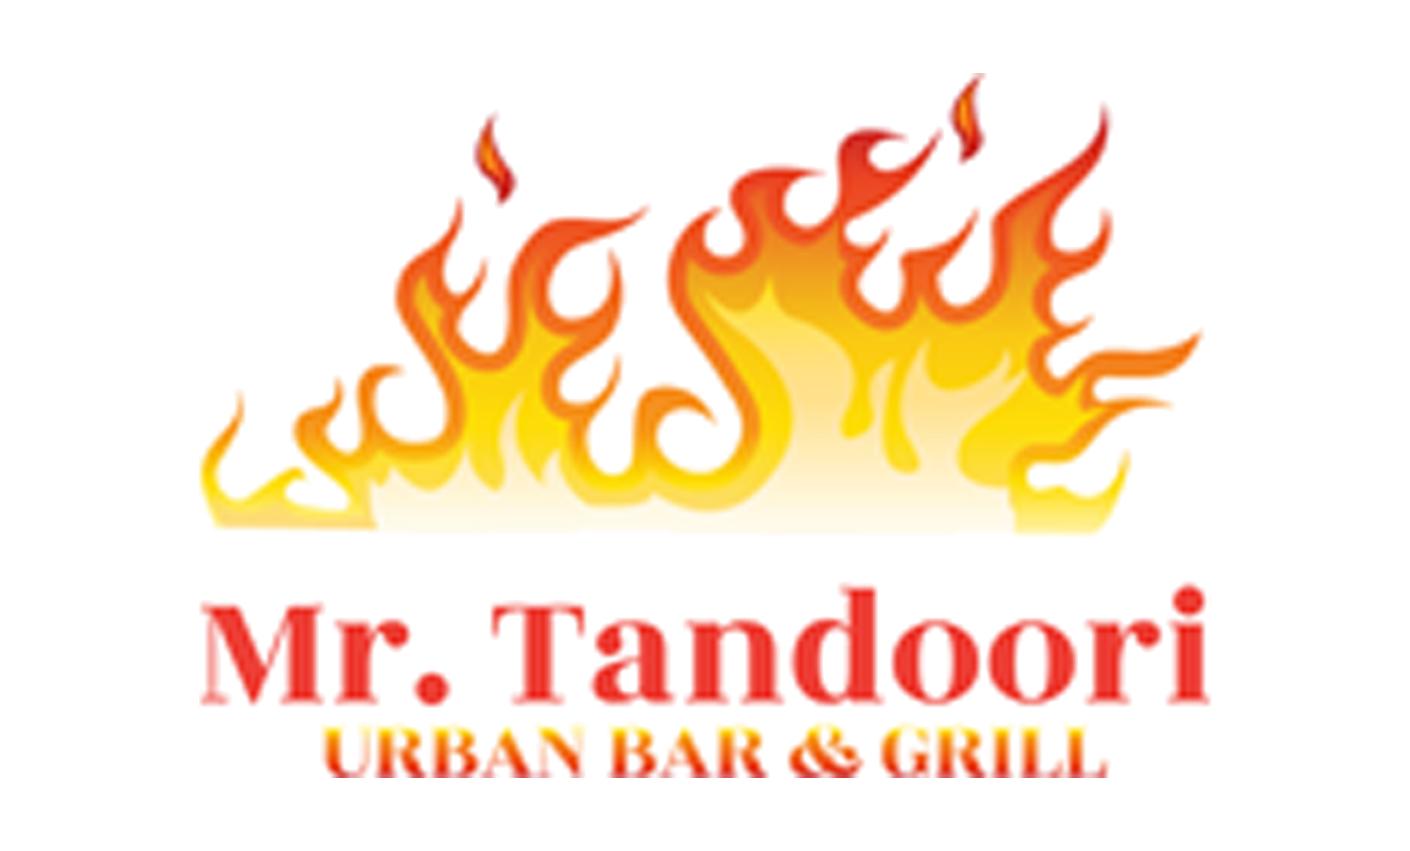 Mr. Tandoori Urban Bar and Grill